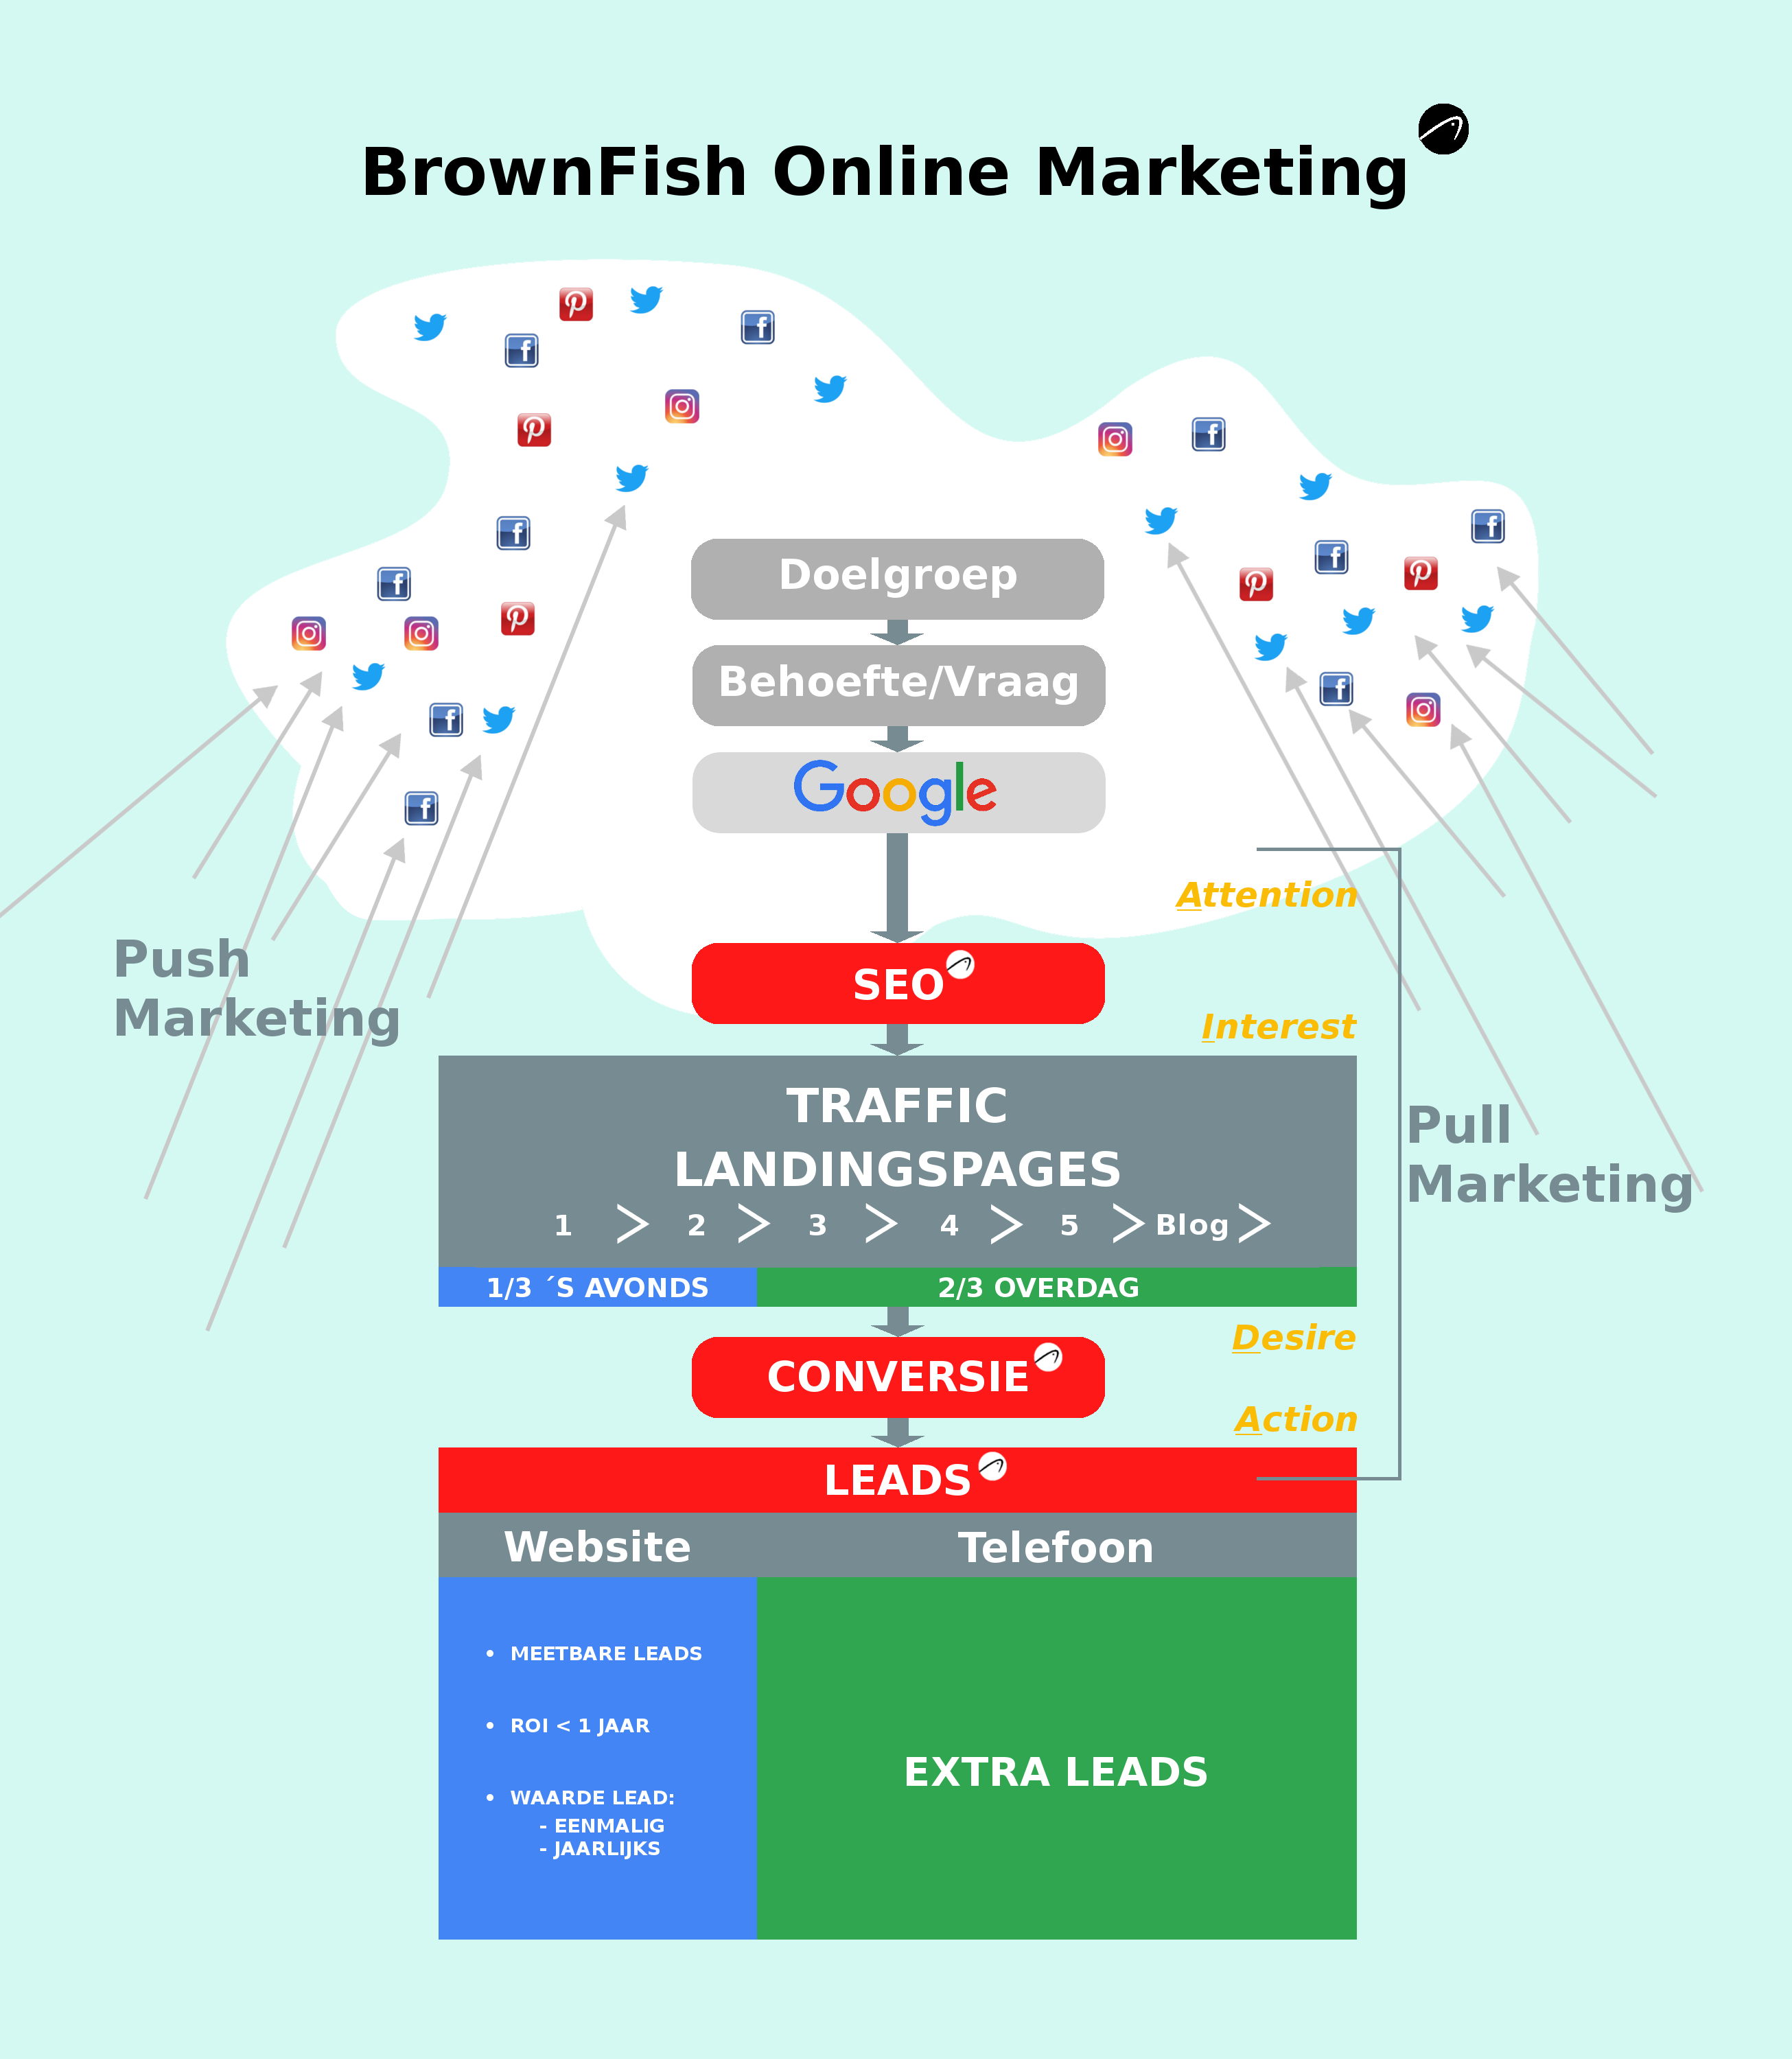 Social Media Marketing BrownFish Online Marketing